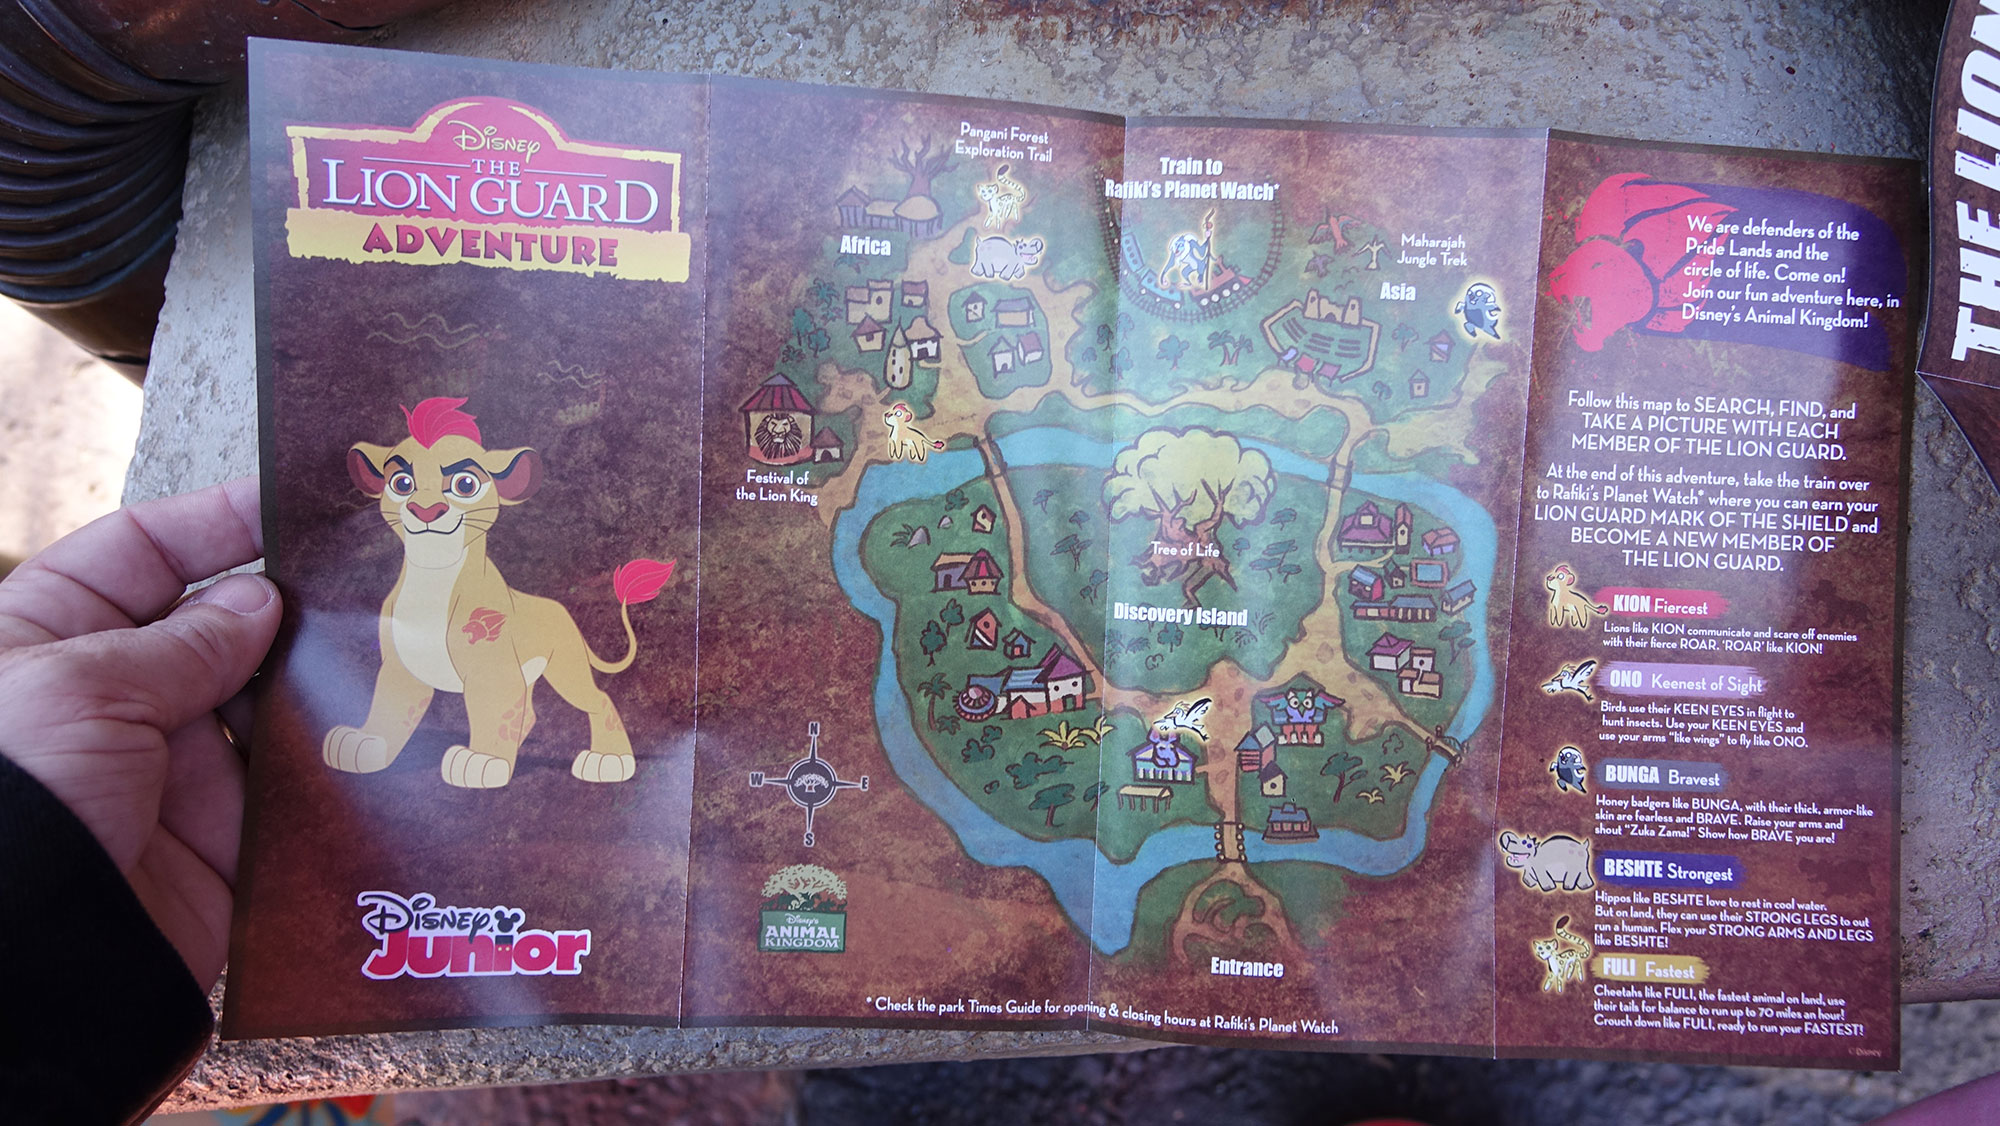 Lion Guard Adventure at Disney's Animal Kingdom (2)